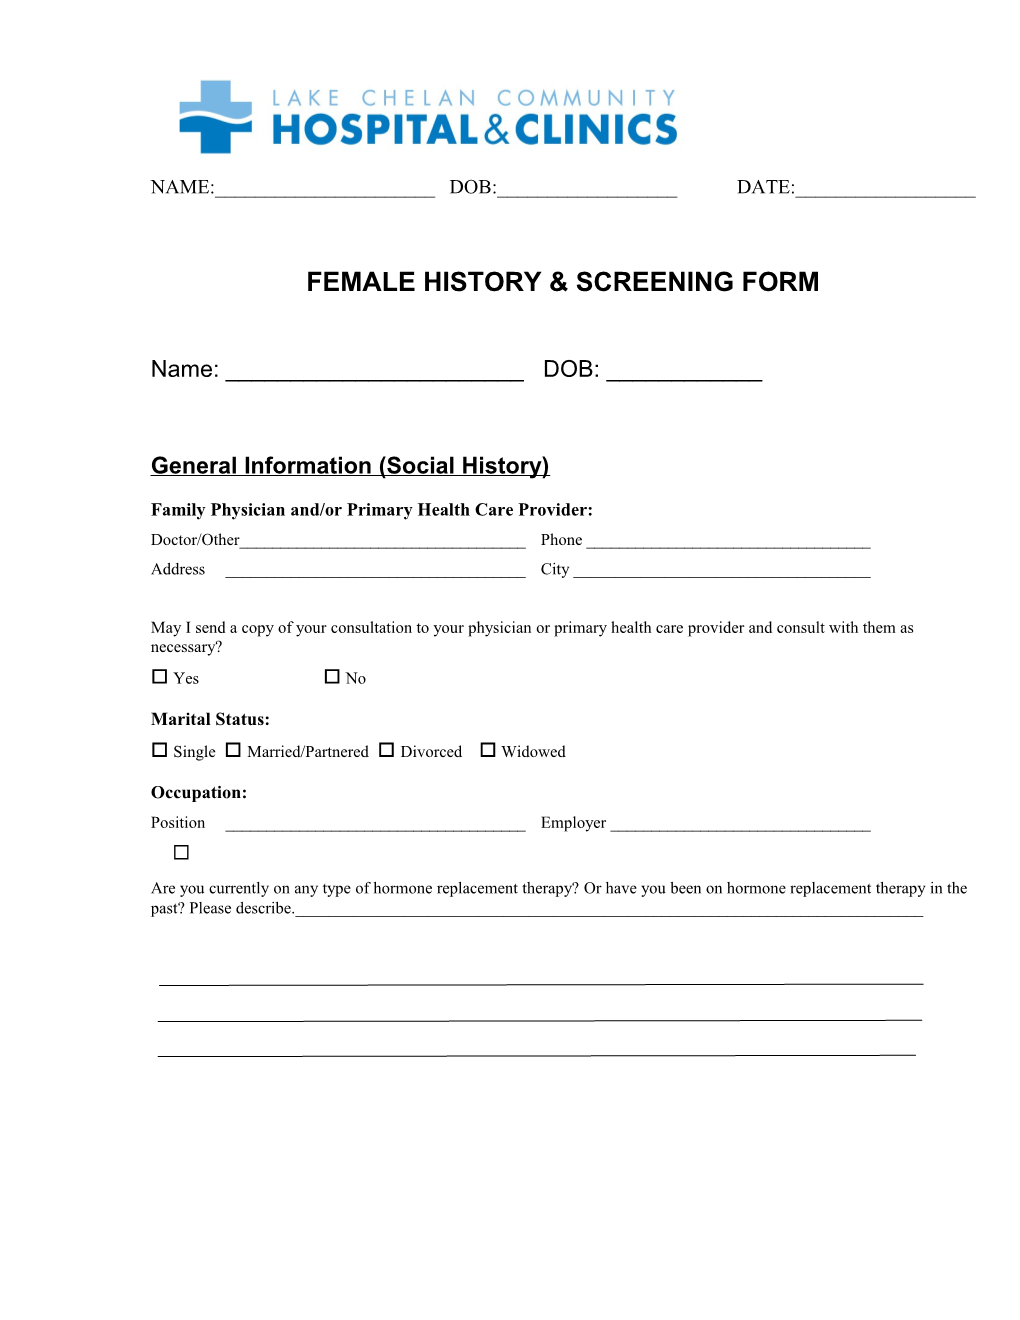 Female History & Screening Form